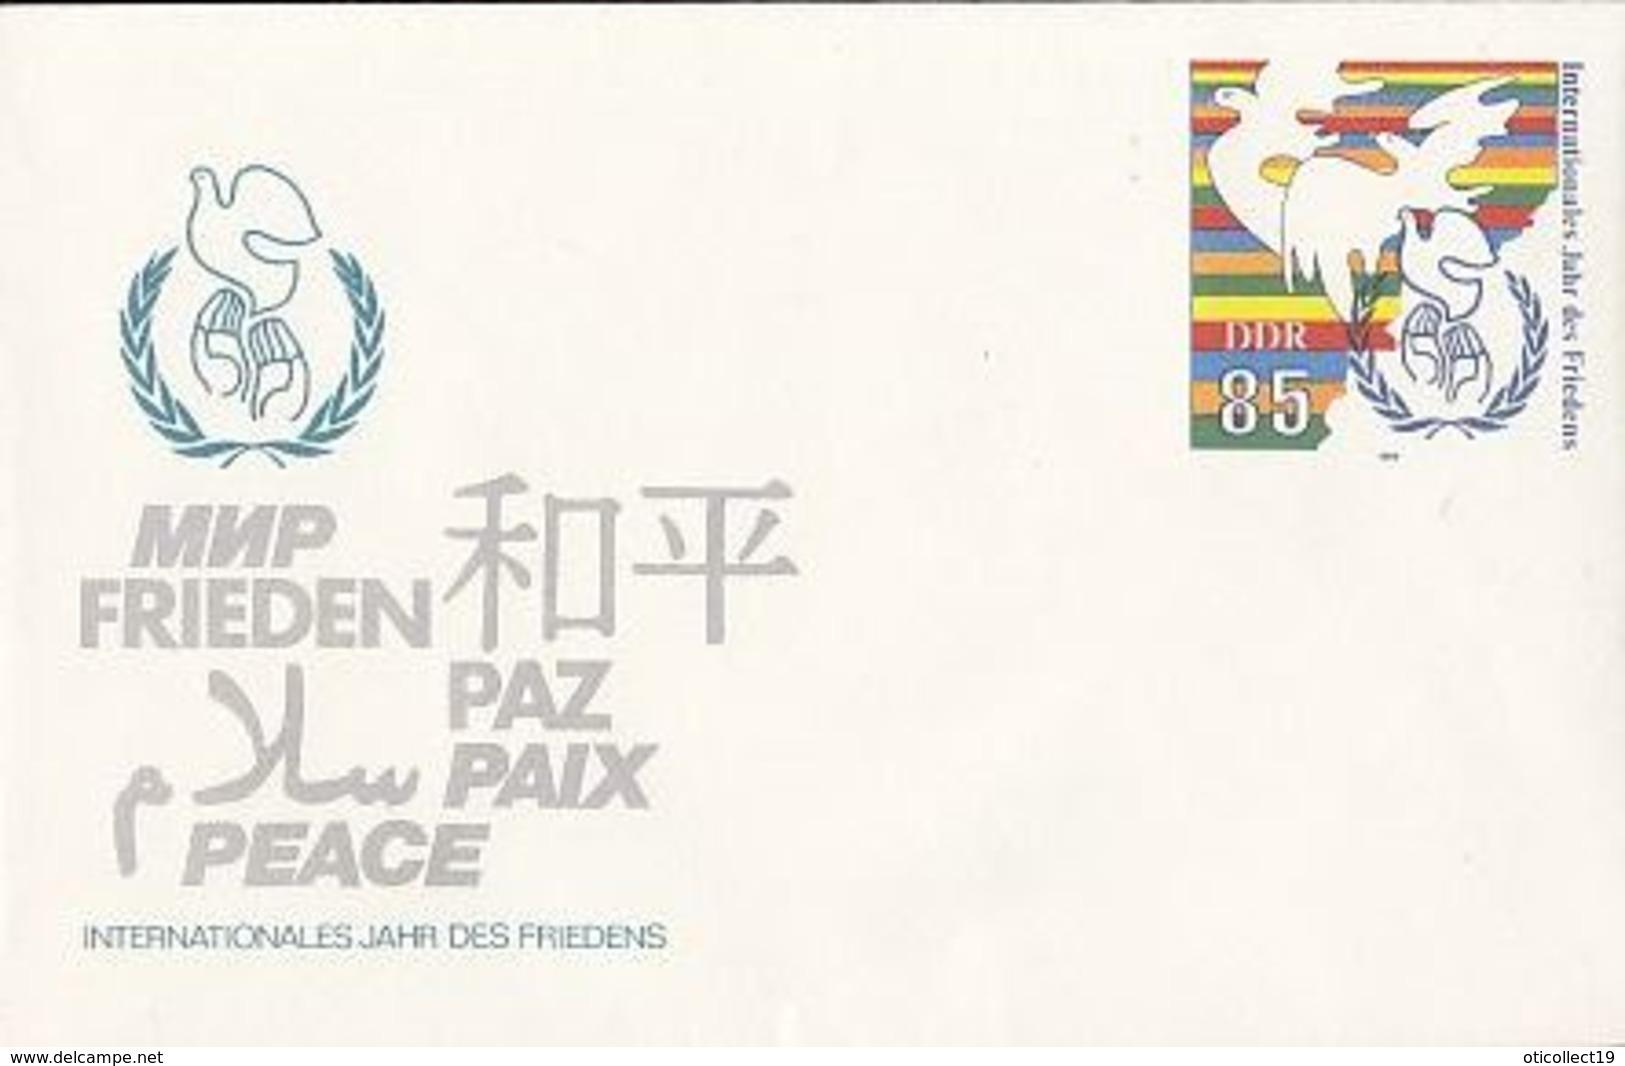 INTERNATIONAL YEAR OF FRIENDSHIP, PEACE, COVER STATIONERY, 1986, GERMANY-DDR - Briefomslagen - Ongebruikt